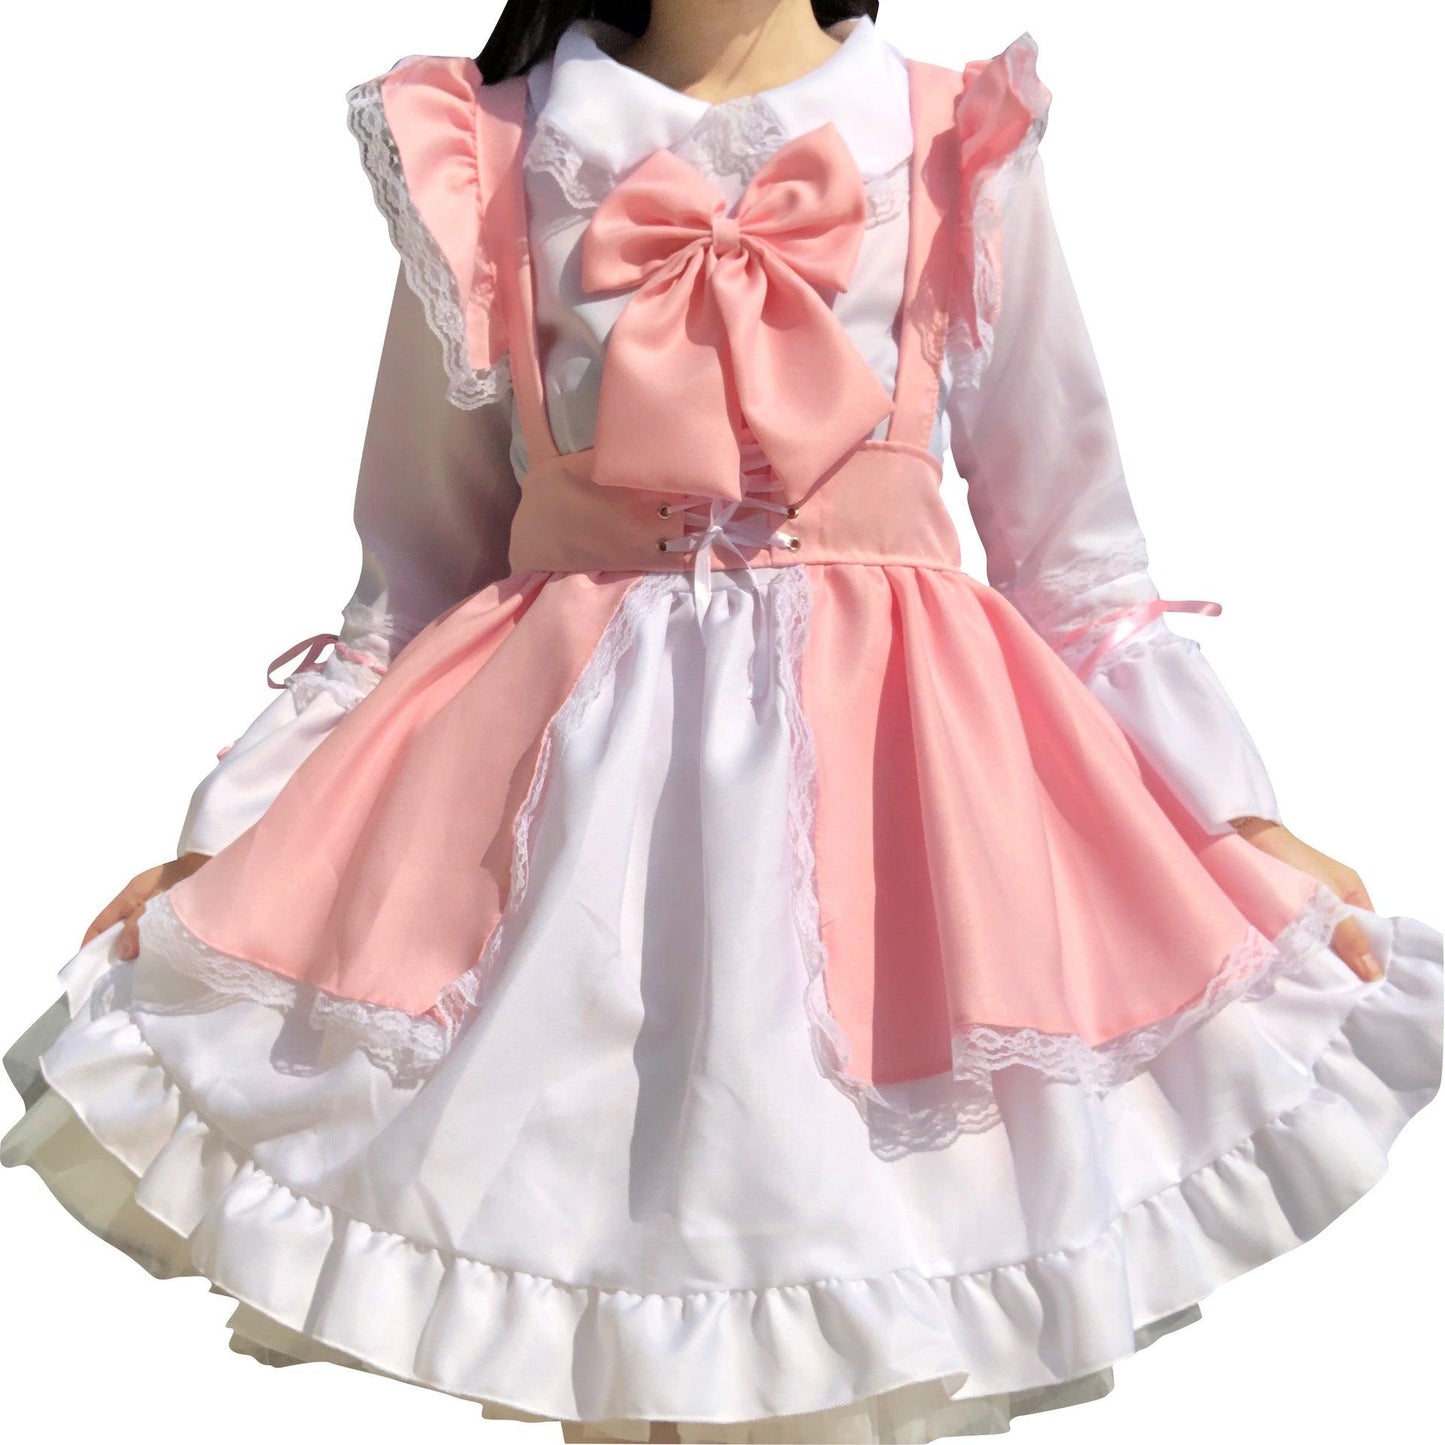 Men and Women Pink Maid Outfit Lolita Short Dress Fancy Cross Dress CD Cosplay Costume